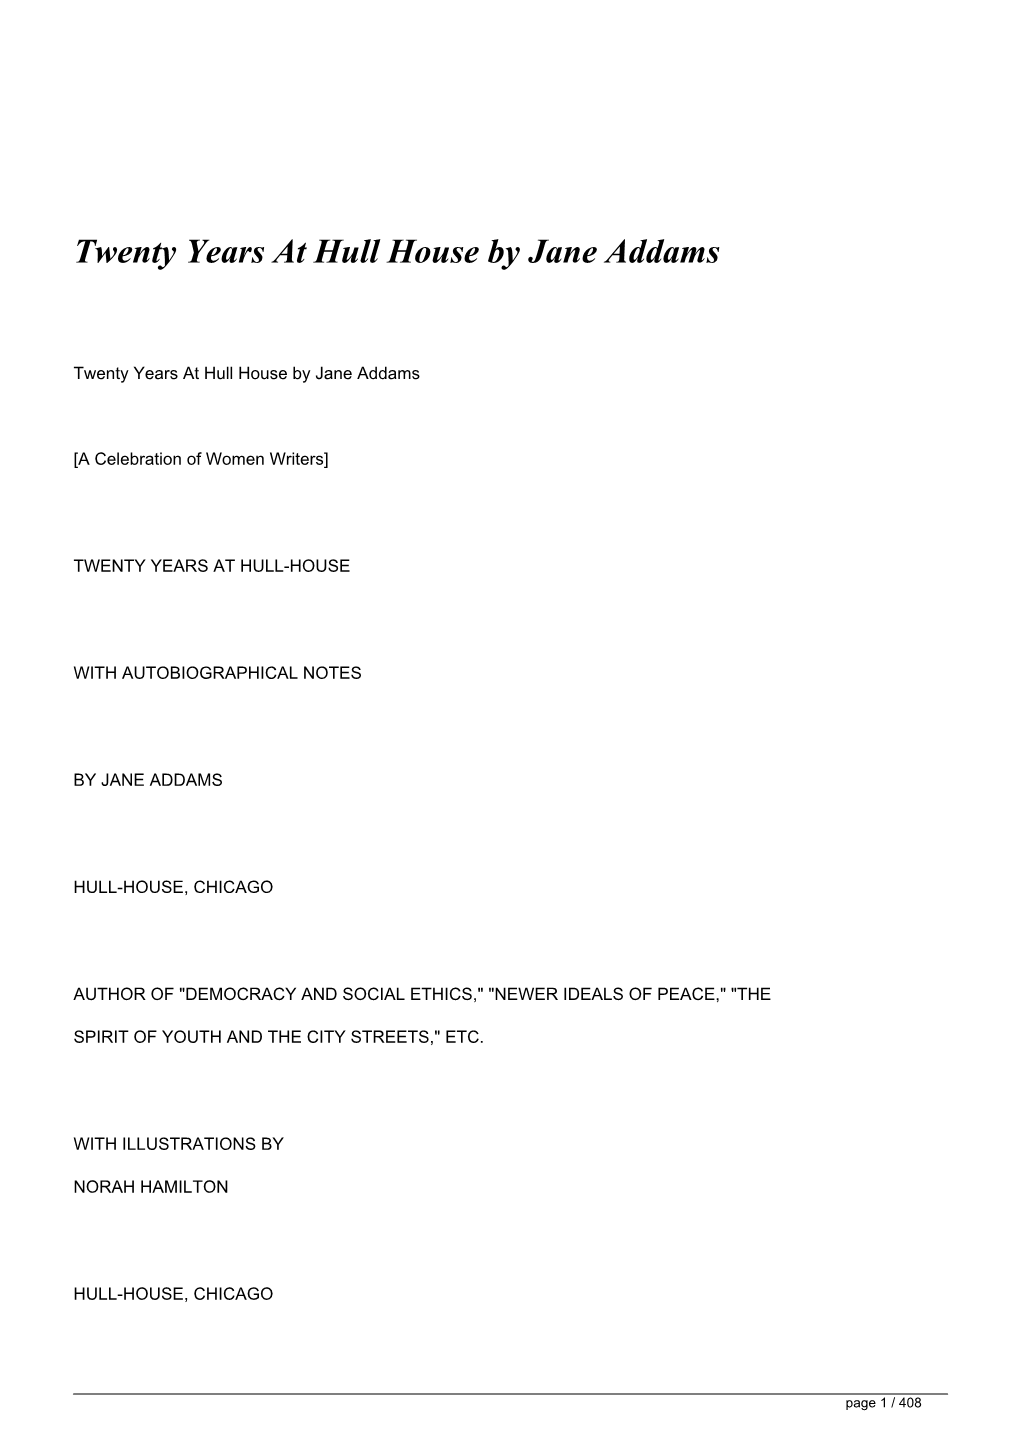 Twenty Years at Hull House by Jane Addams&lt;/H1&gt;